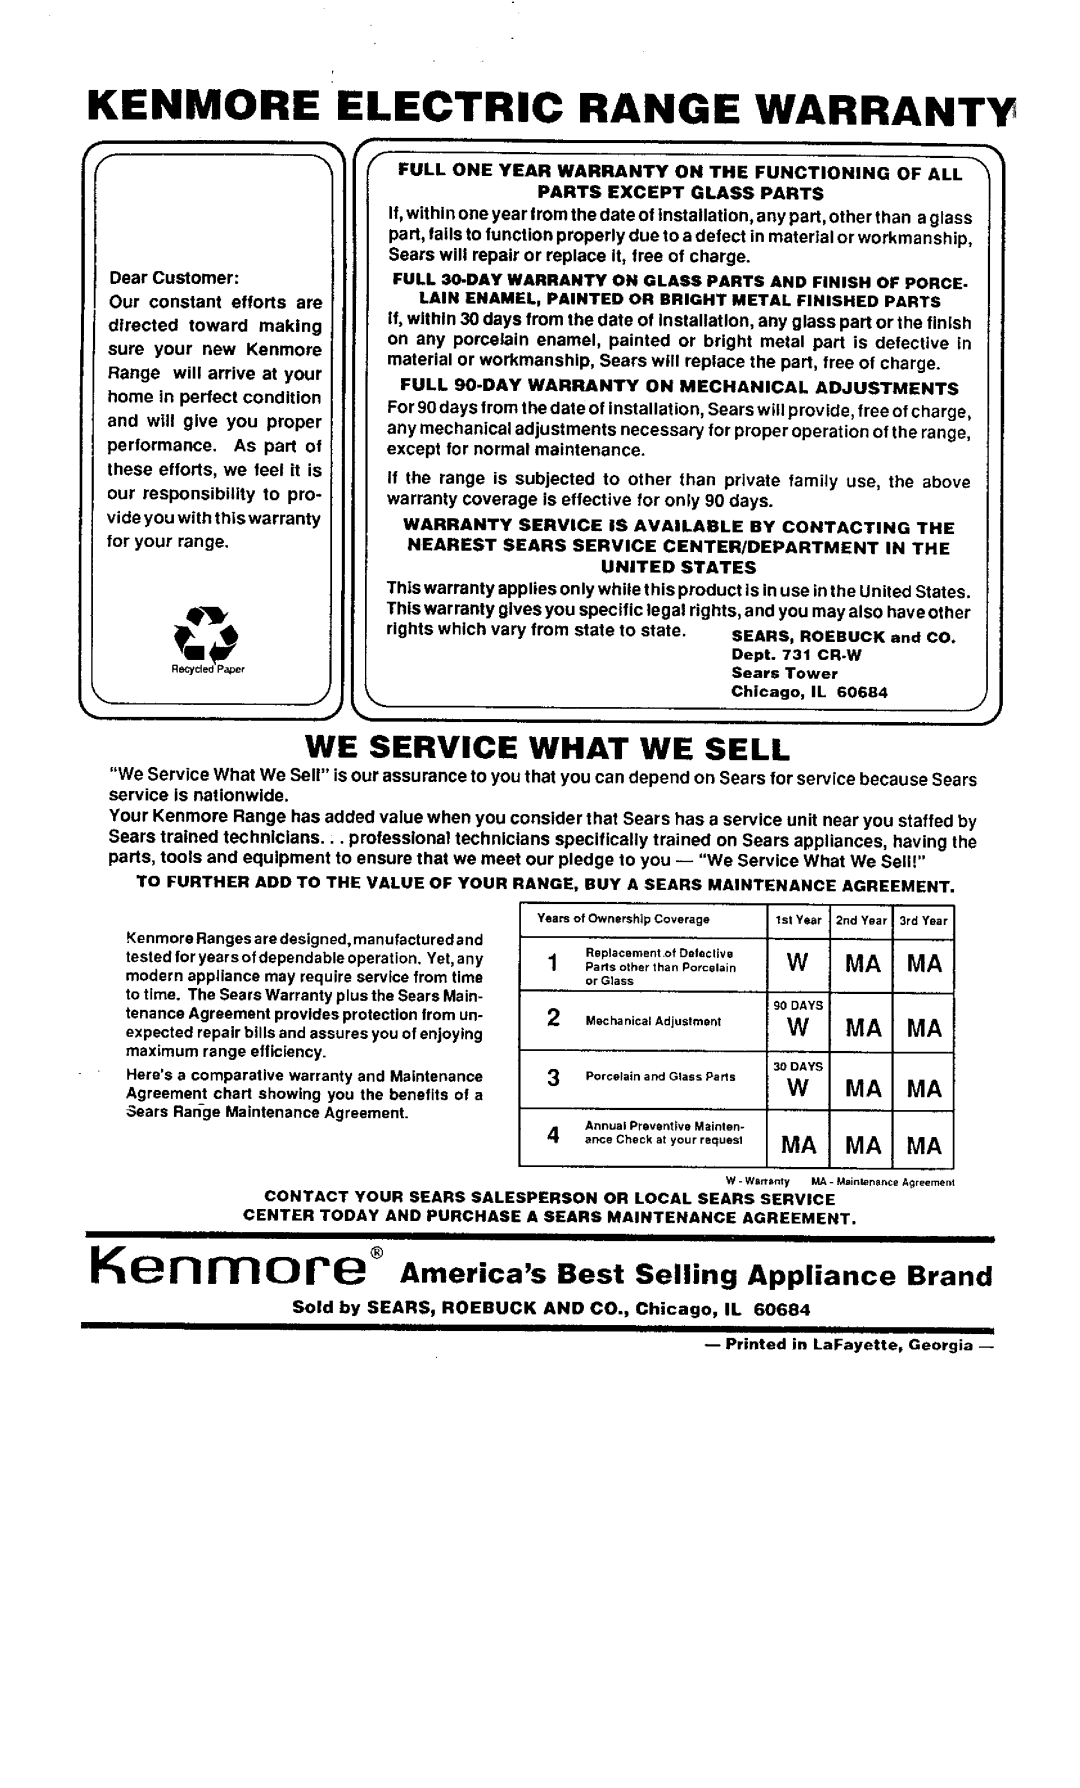 Sears 45521, 45520 warranty We Service What We Sell, p..sotherthanPorcelain W, Kenmore Electric Range Warranty 